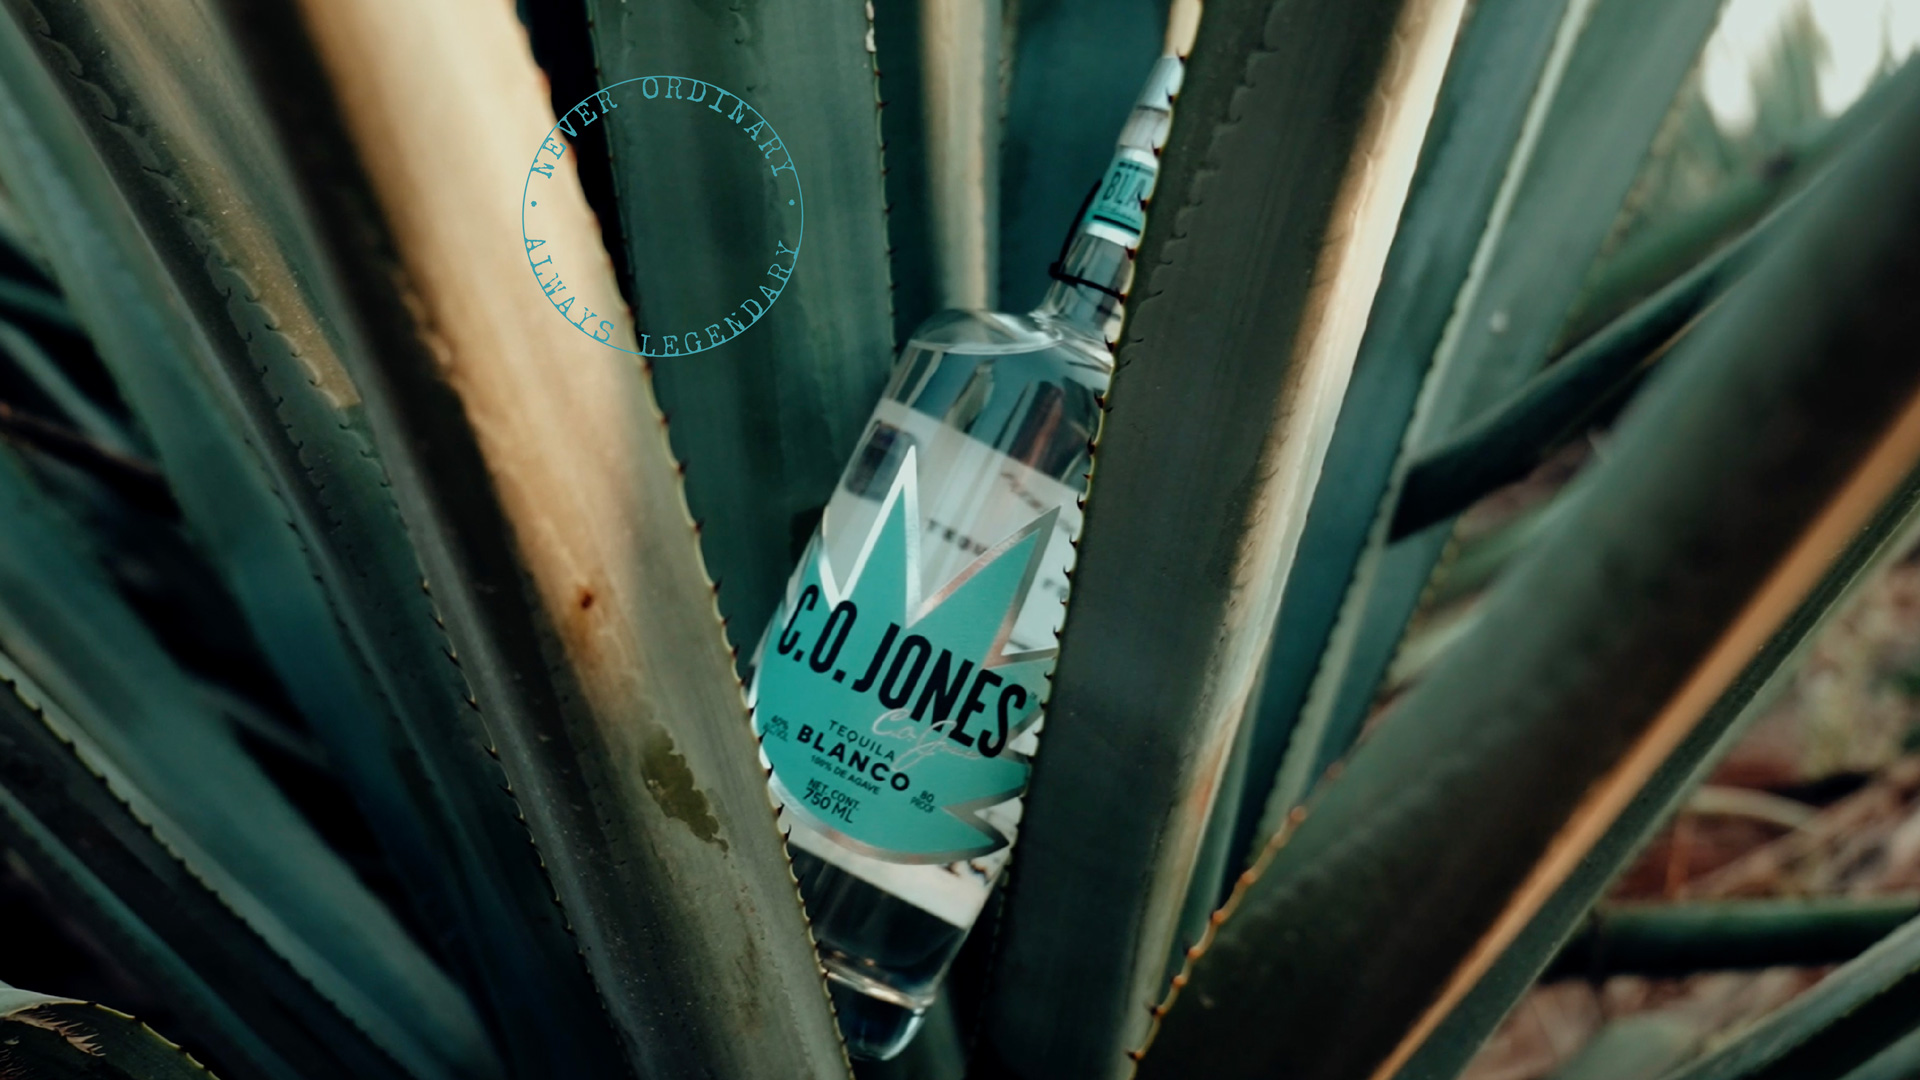 C.O. Jones Blanco Tequila bottle design